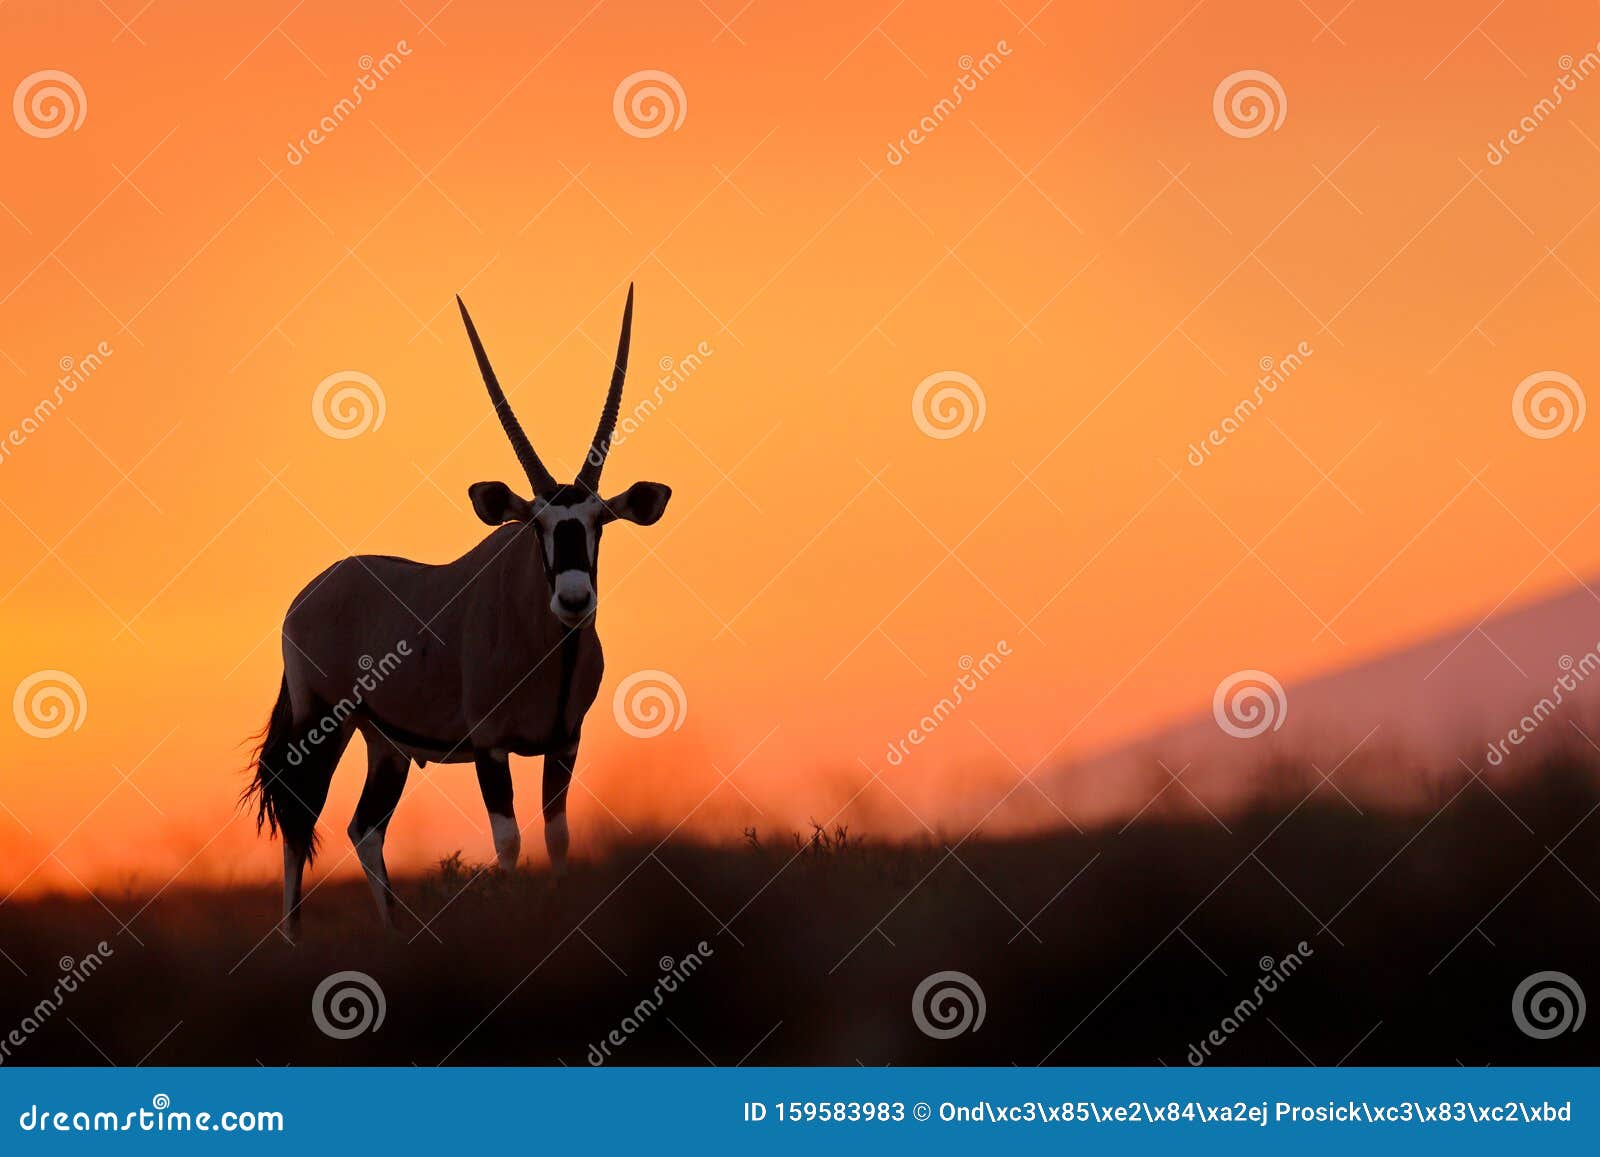 oryx with orange sand dune evening sunset. gemsbock large antelope in nature habitat, sossusvlei, namibia. wild desert. gazella